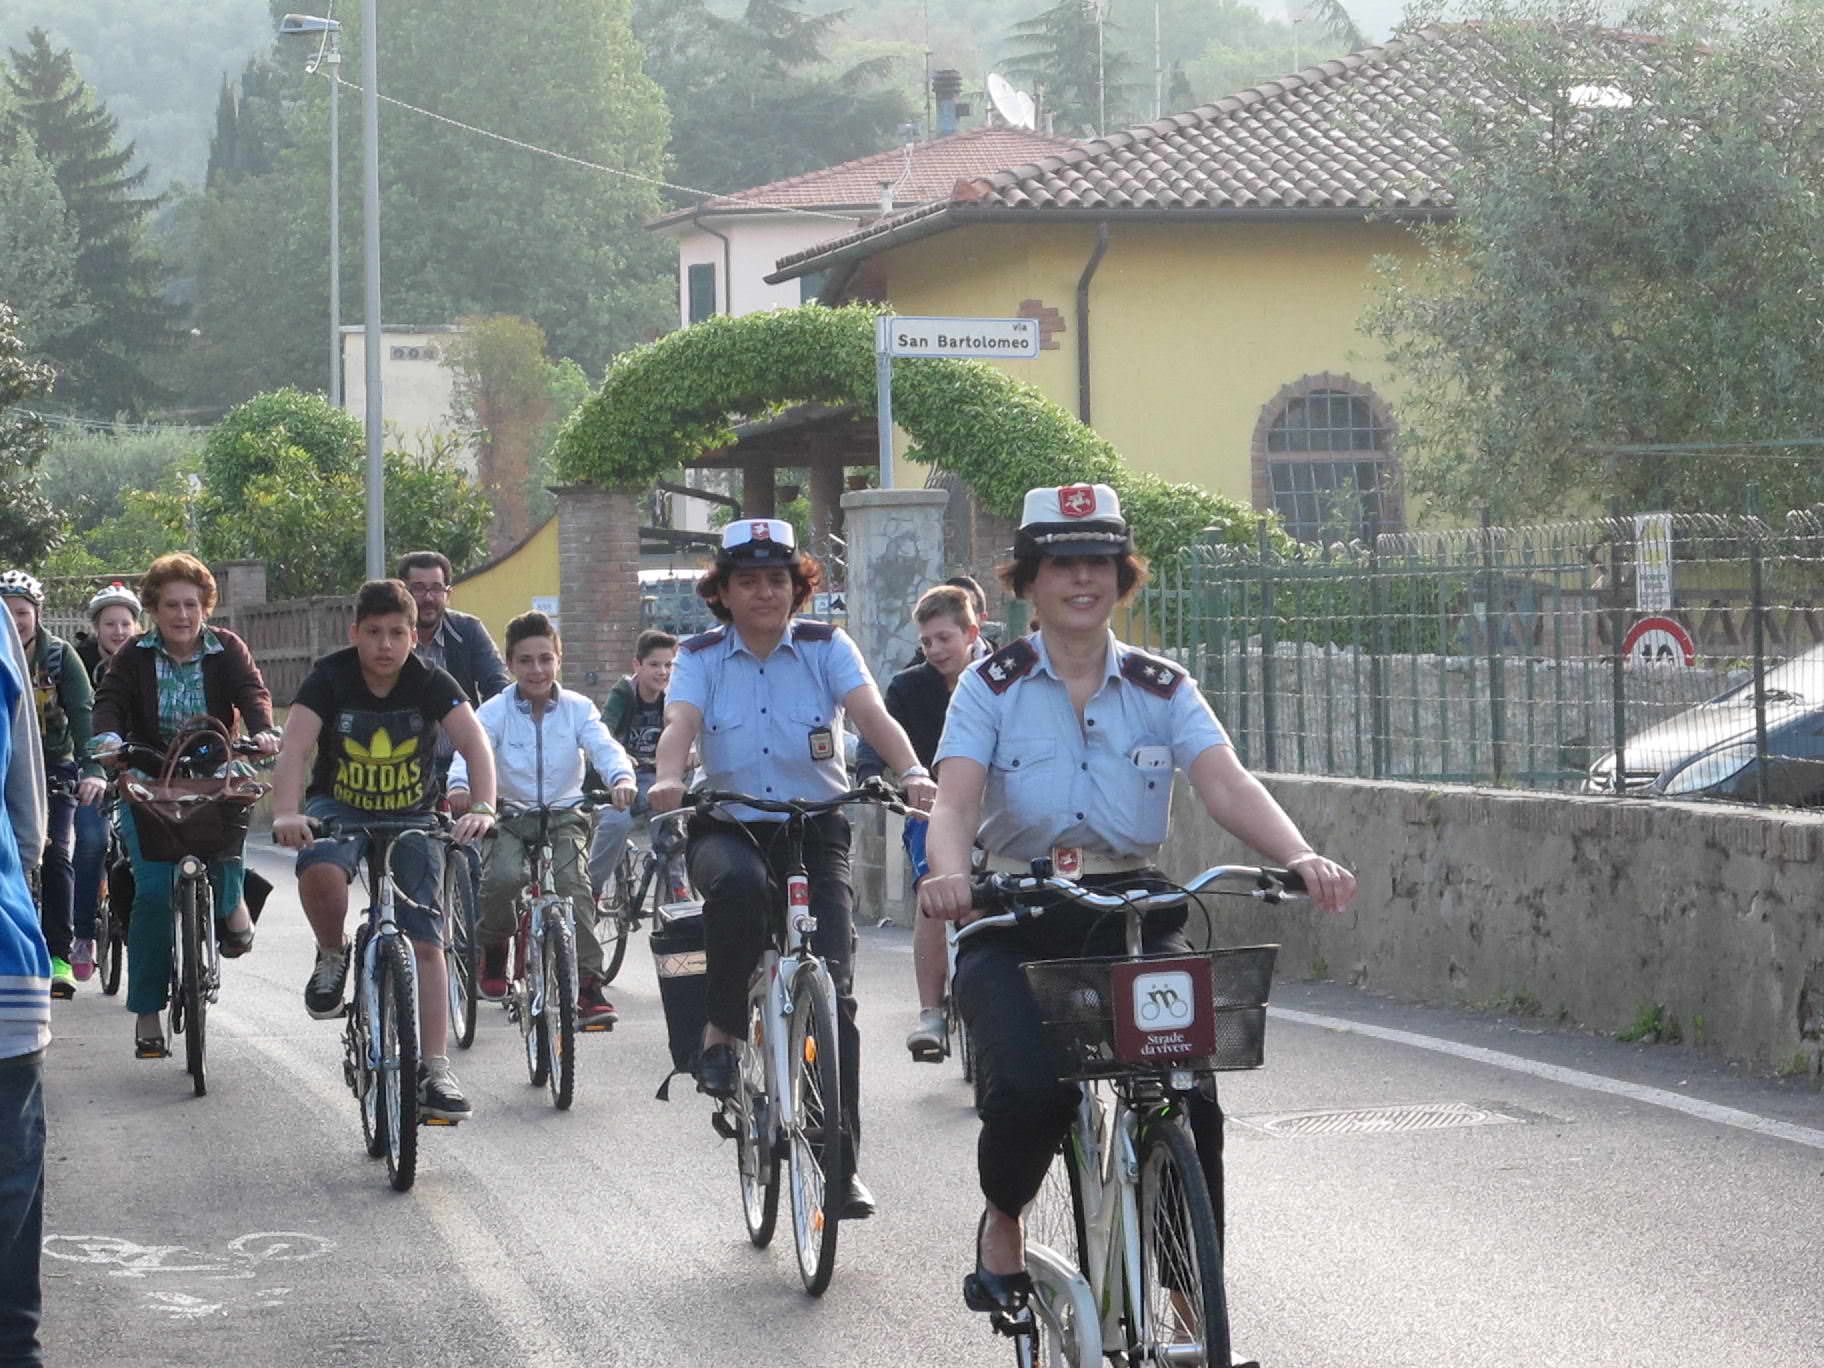 Tutti assieme in bicicletta, bella iniziativa a Massarosa